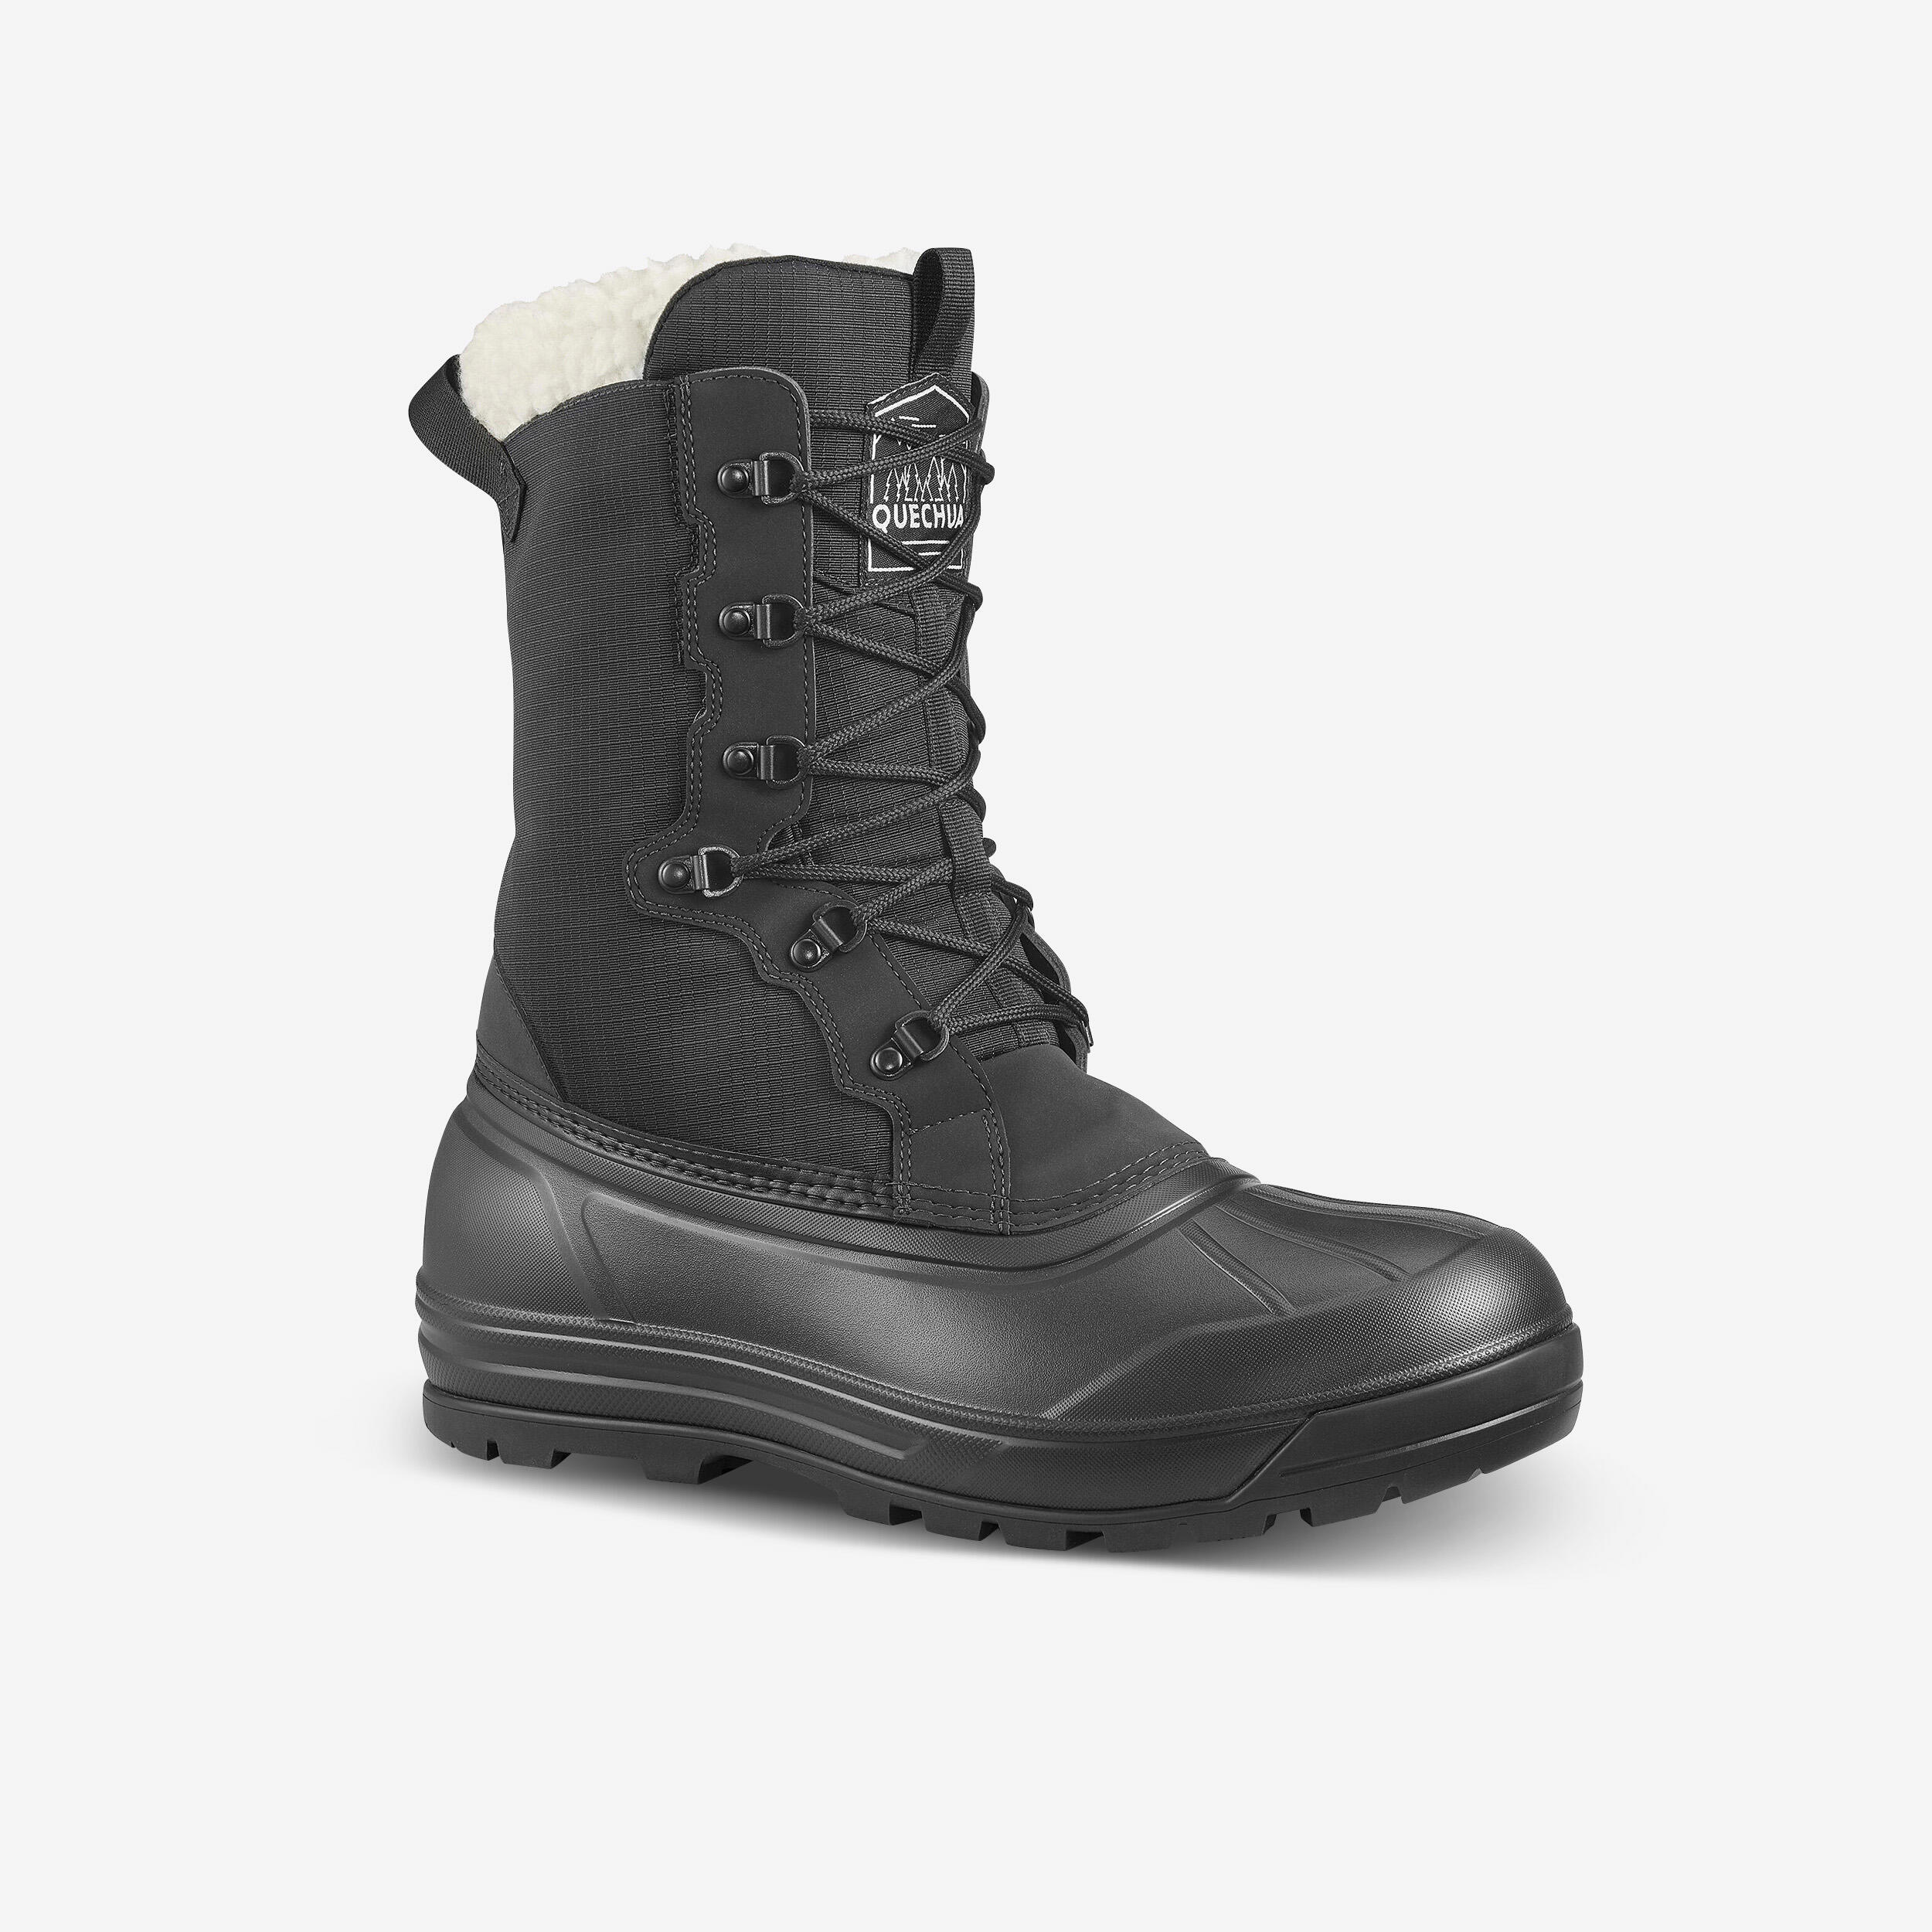 Men’s Warm Waterproof Snow Boots  - SH900 lace-up  1/10